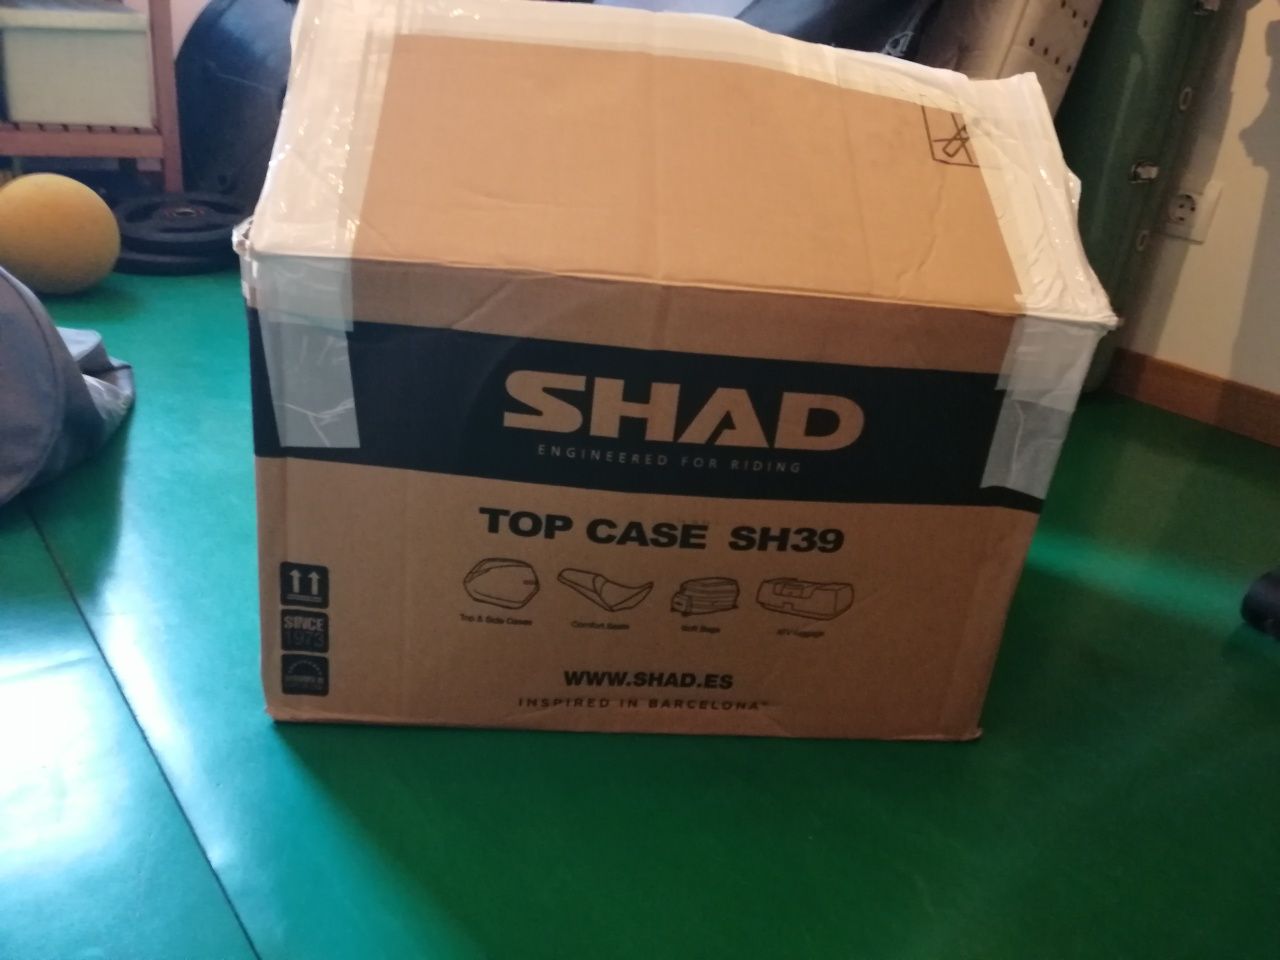 Top case - Shad sh39